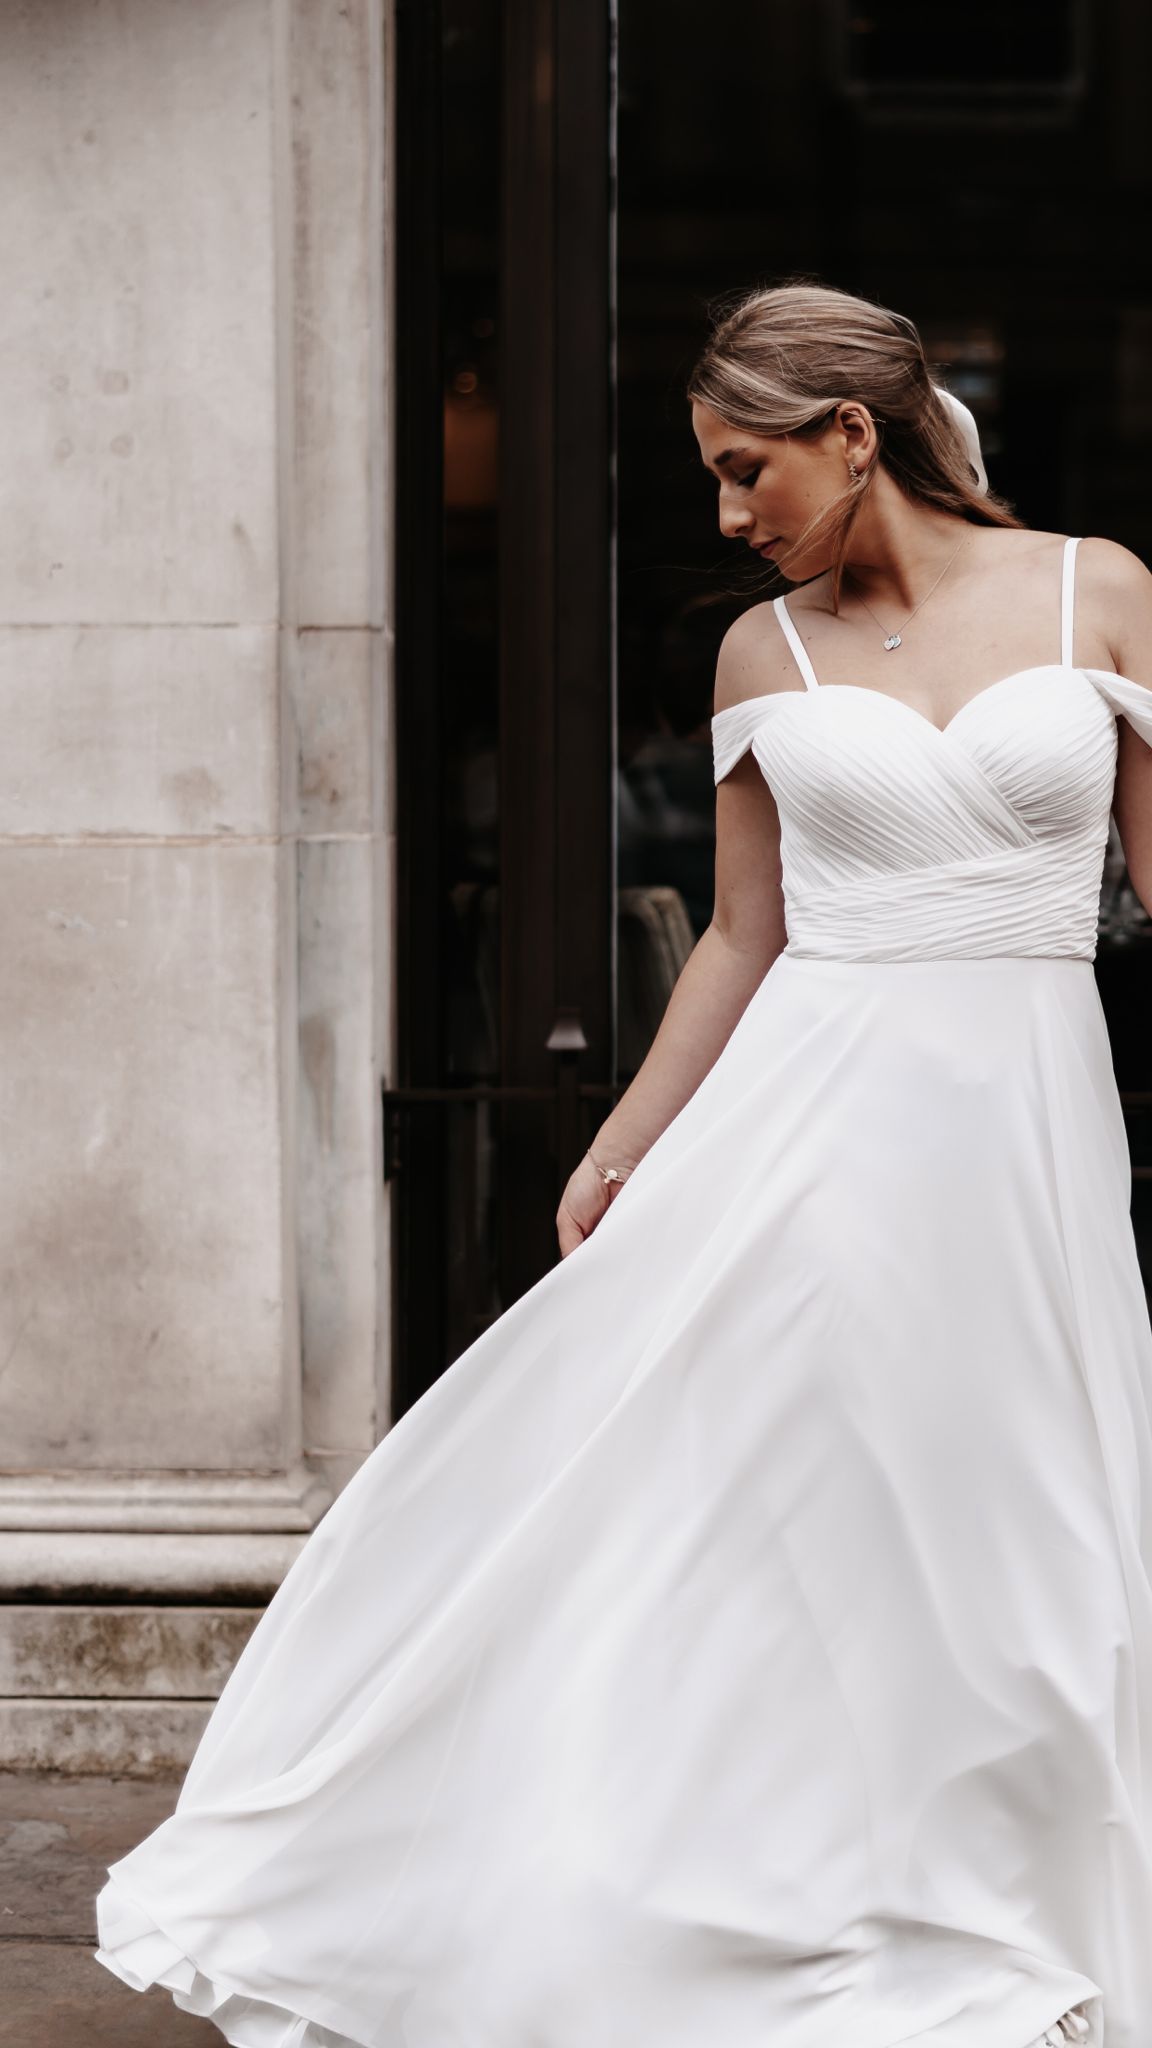 Best Dress 2 Impress Bridal-Image-52